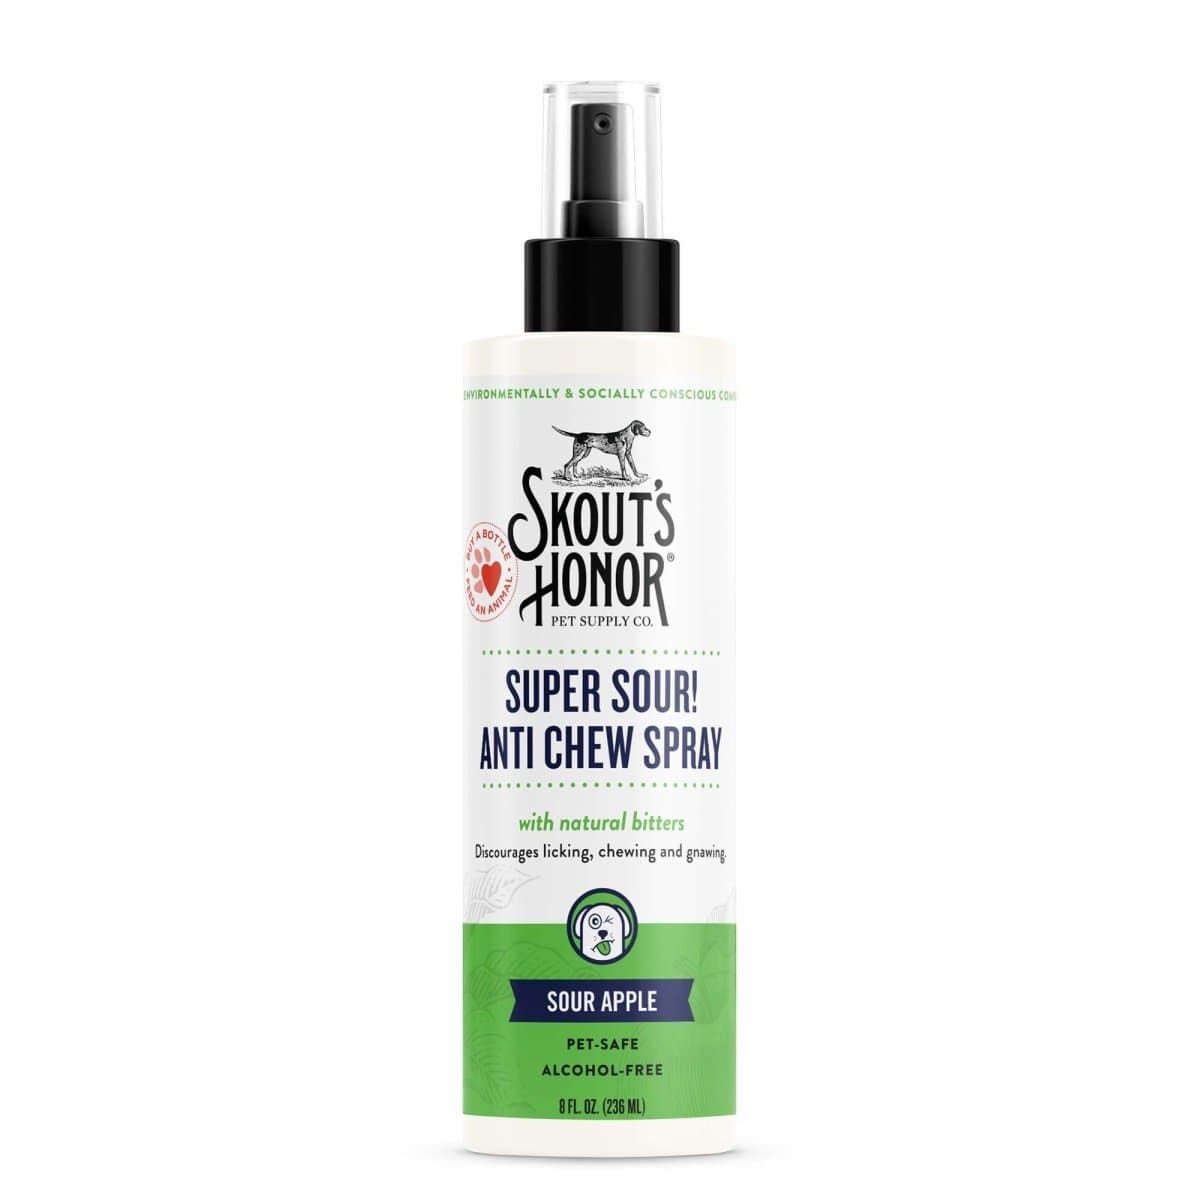 Skout's Honor - Super Sour! Anti Chew Spray